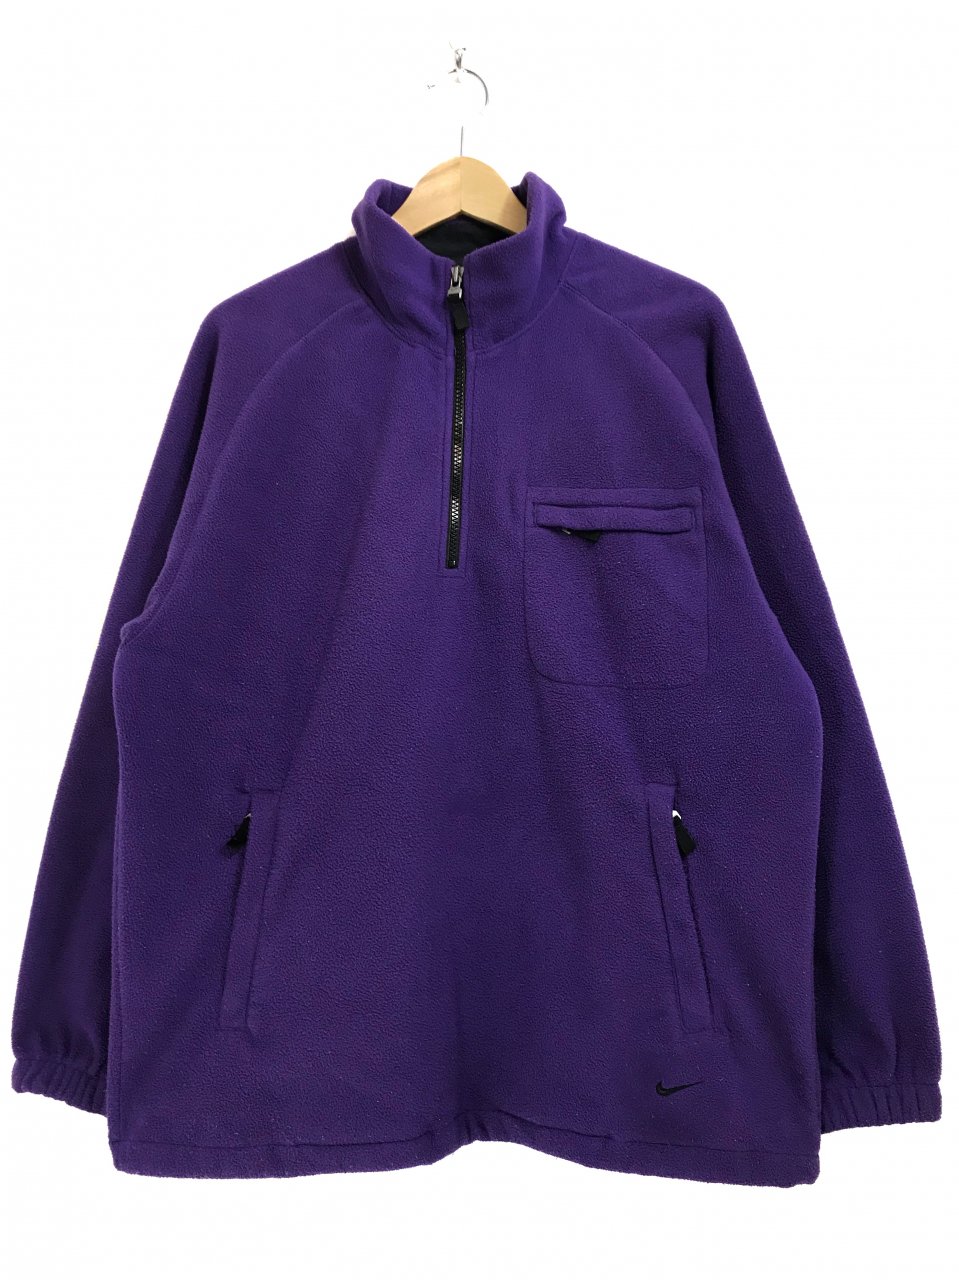 NIKE Half-Zip Pullover Fleece Jacket 紫 L ナイキ ハーフジップ プルオーバー フリース ロゴ ワンポイント  スウッシュ パープル - NEWJOKE ONLINE STORE